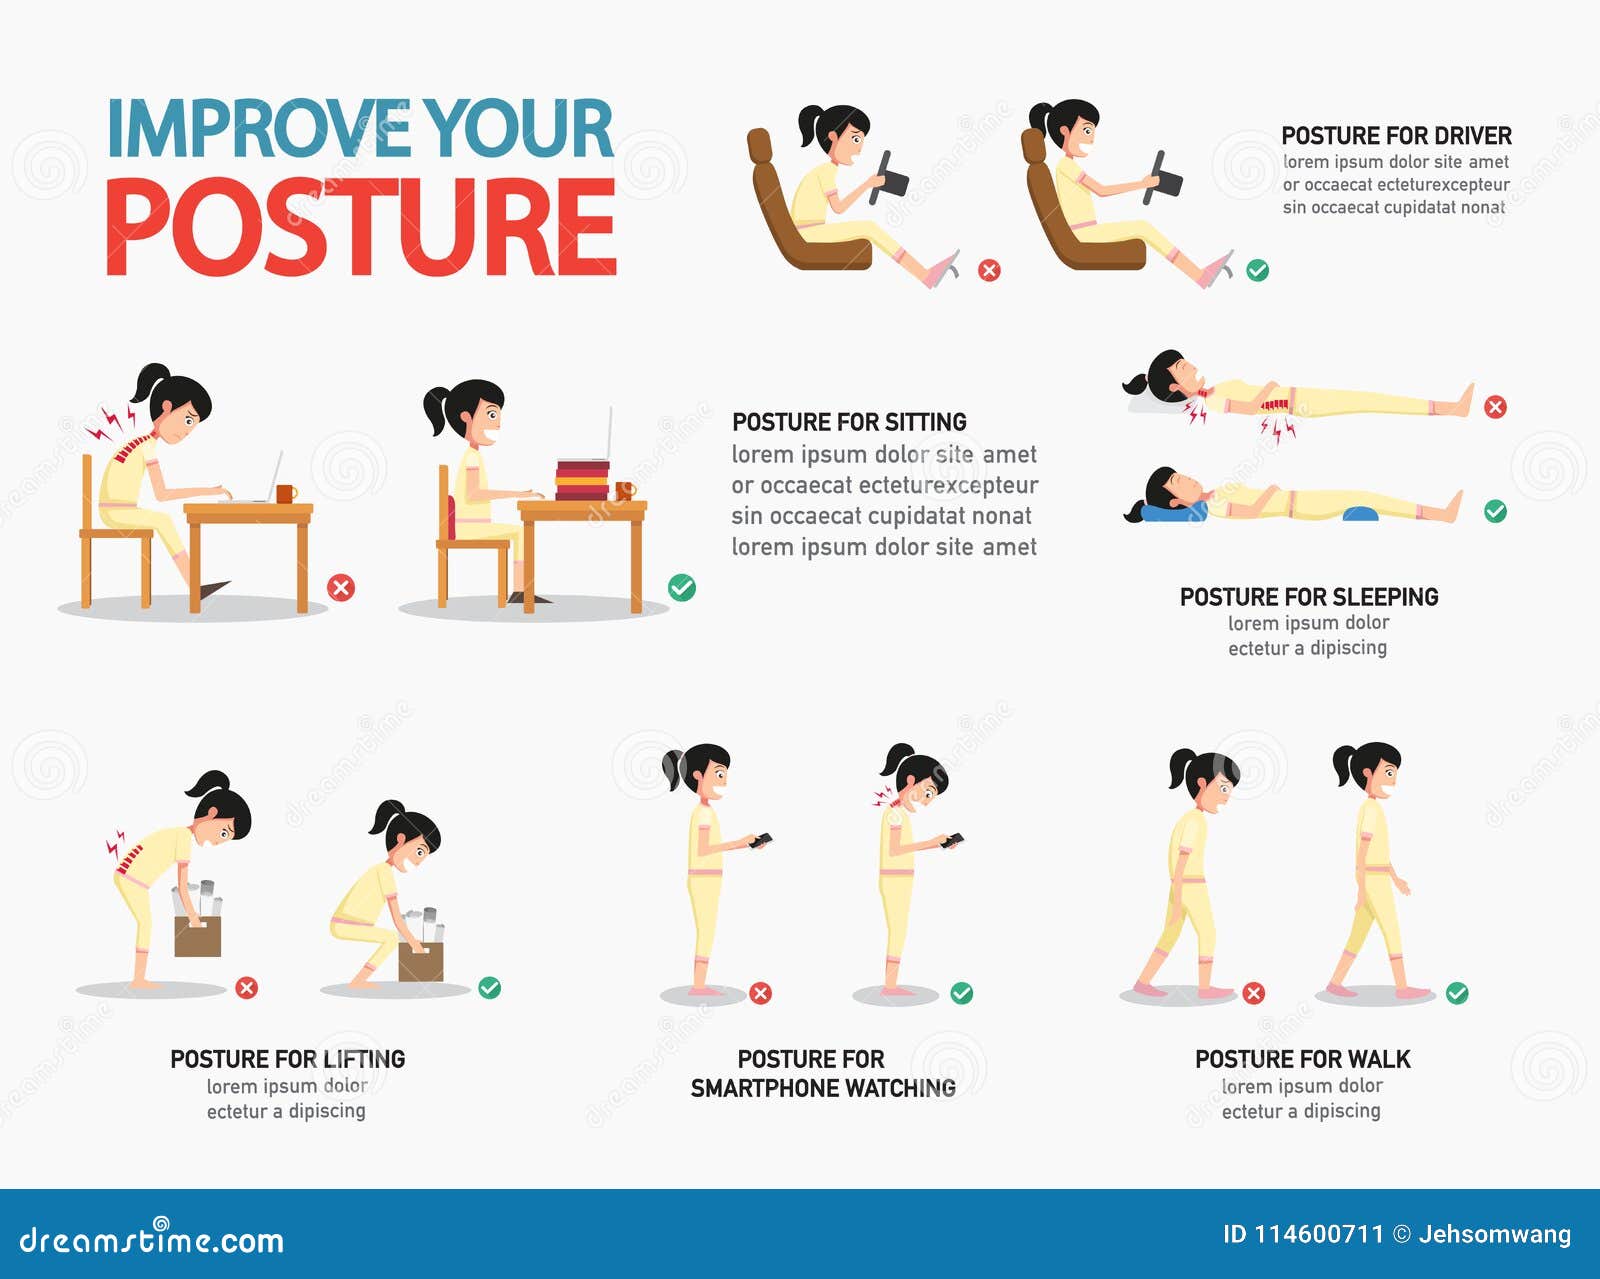 improve your posture infographic